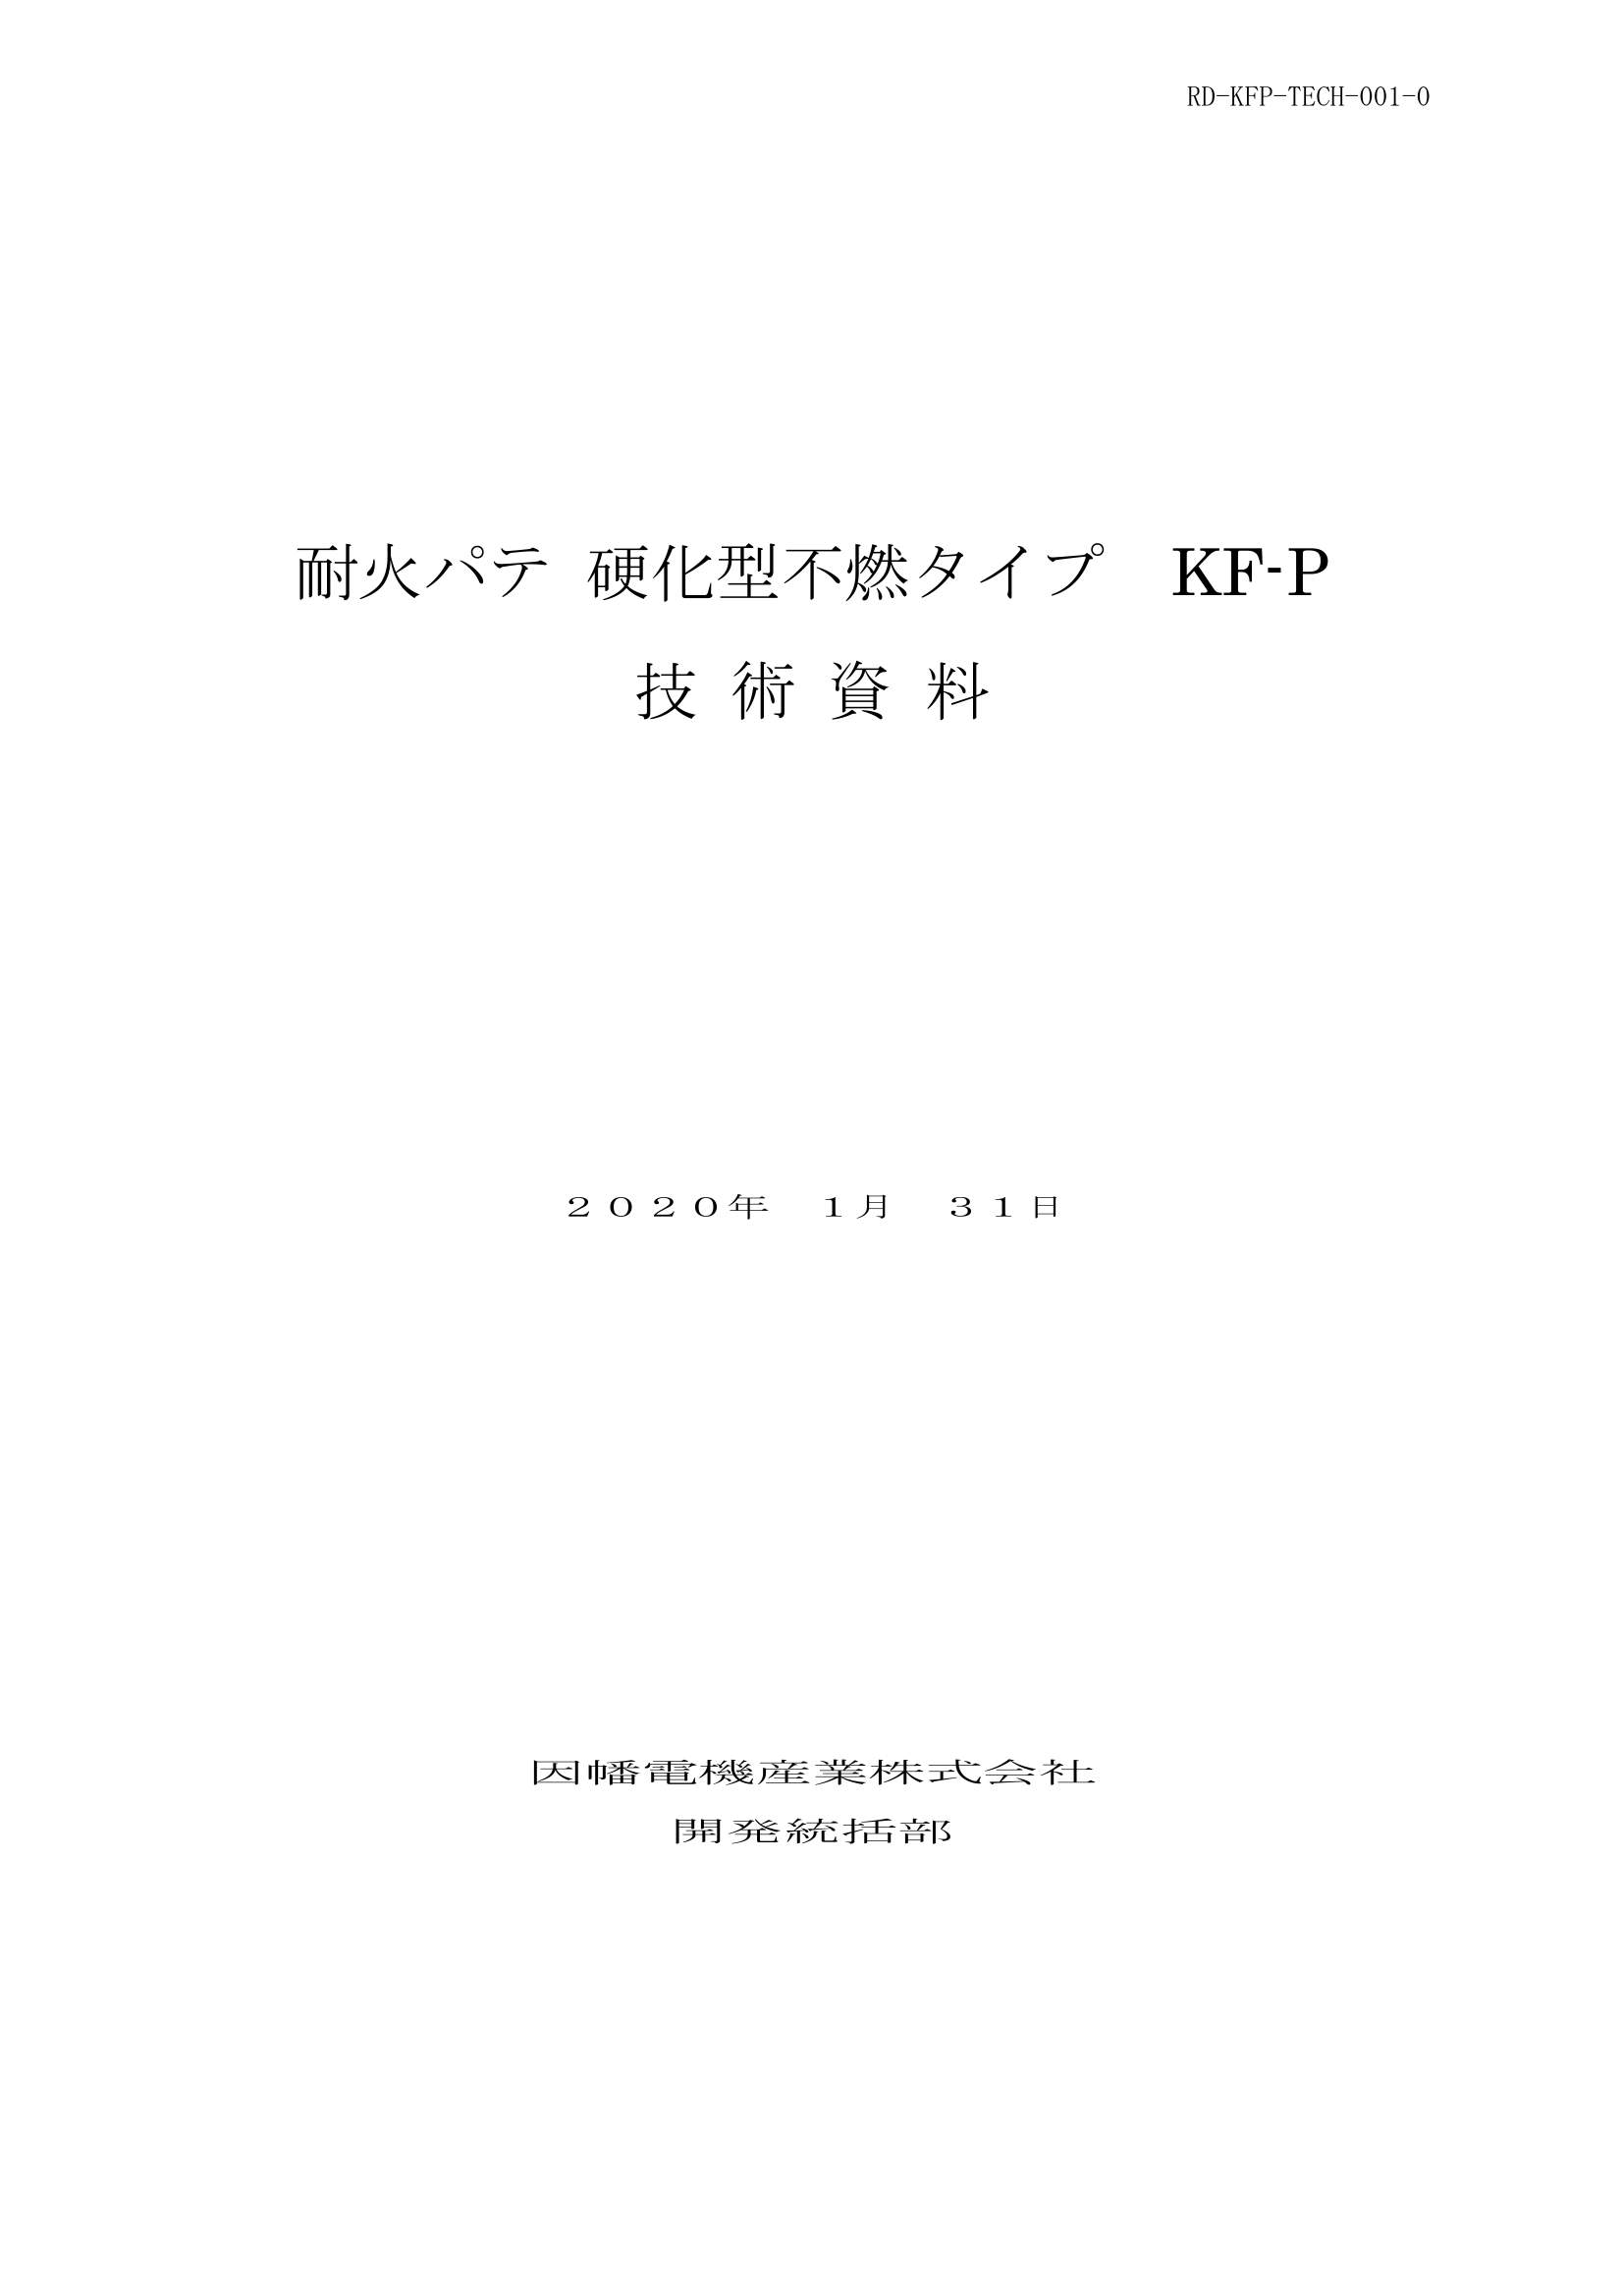 KF-P_技術資料_20200131.pdf